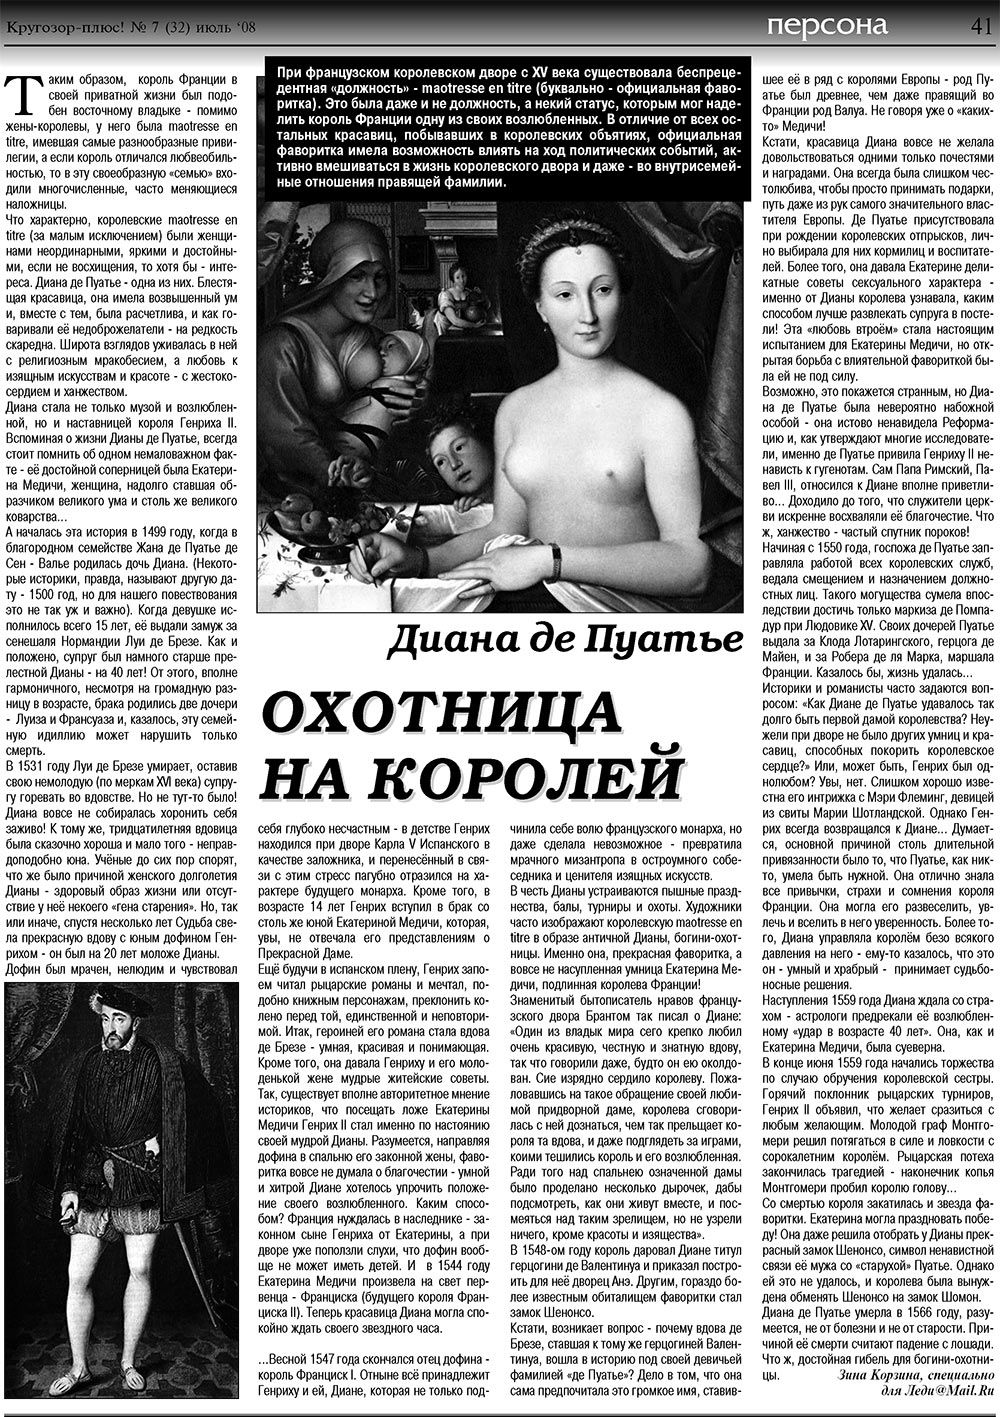 Кругозор плюс! (газета). 2008 год, номер 7, стр. 41